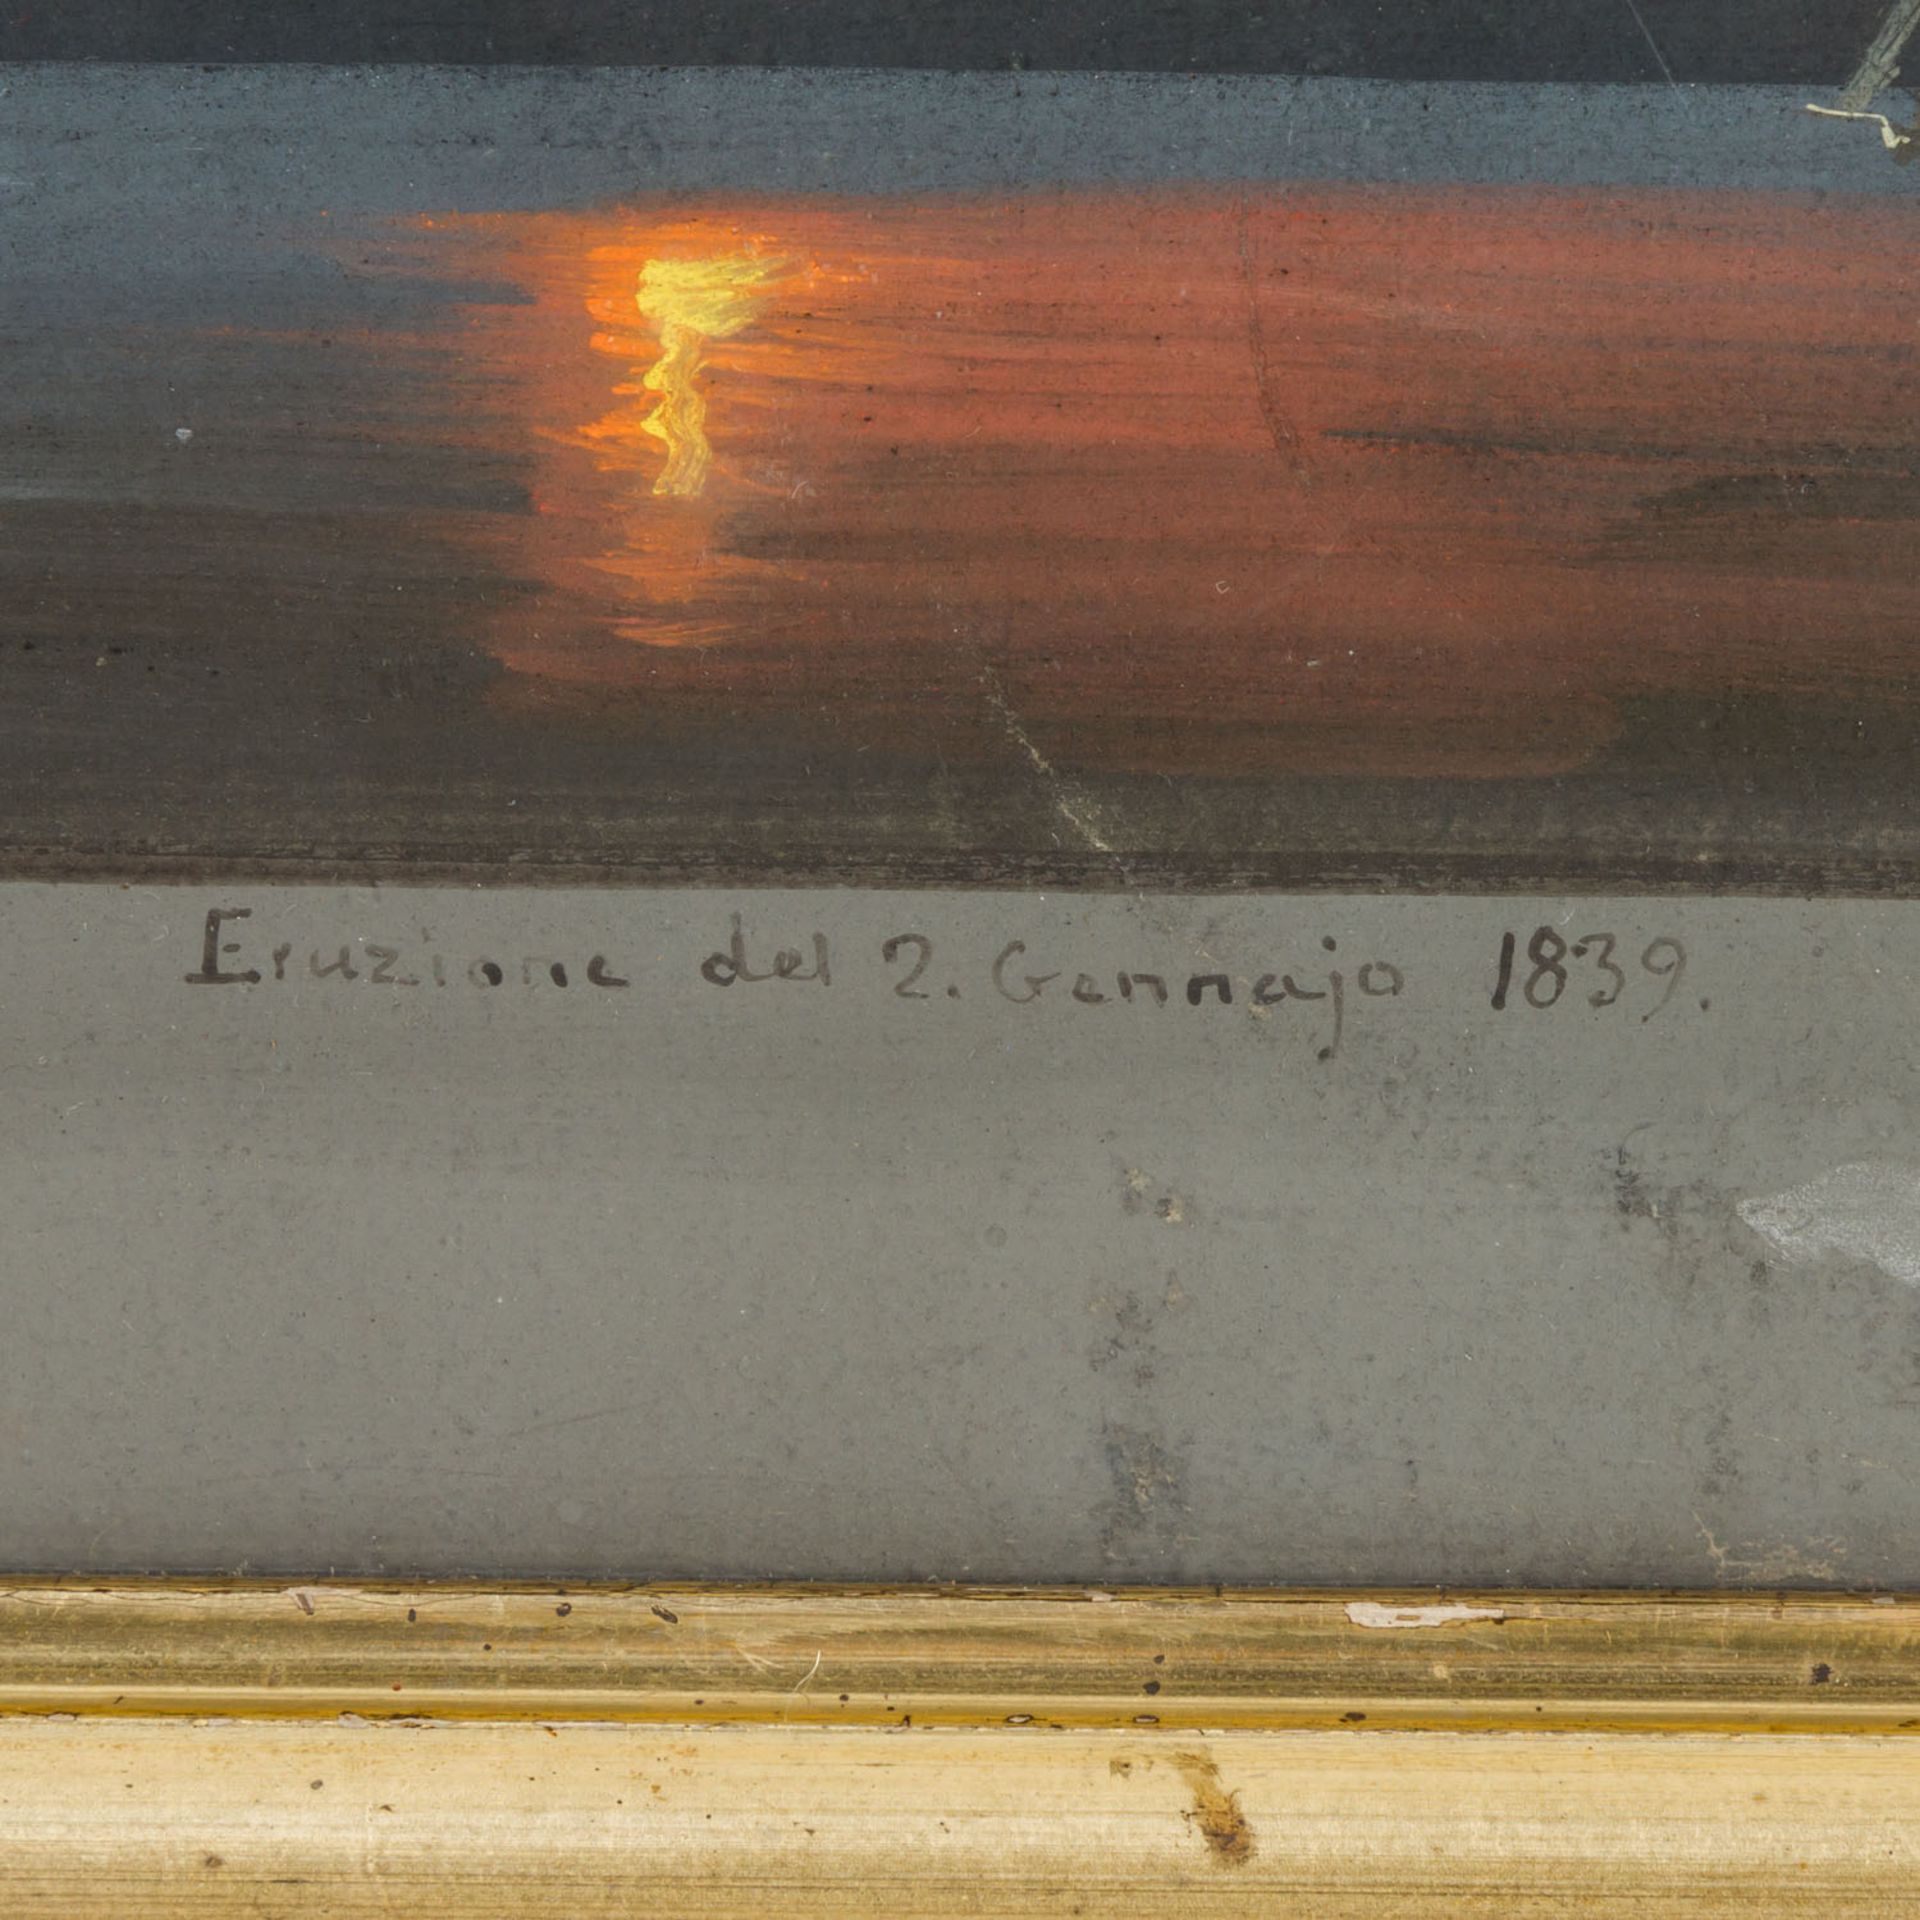 MIGLIORATO, D. (Künstler 19. Jh.), "Eruzione dal 2. Gennajo 1839",Neapel, Ausbruch de - Bild 4 aus 5